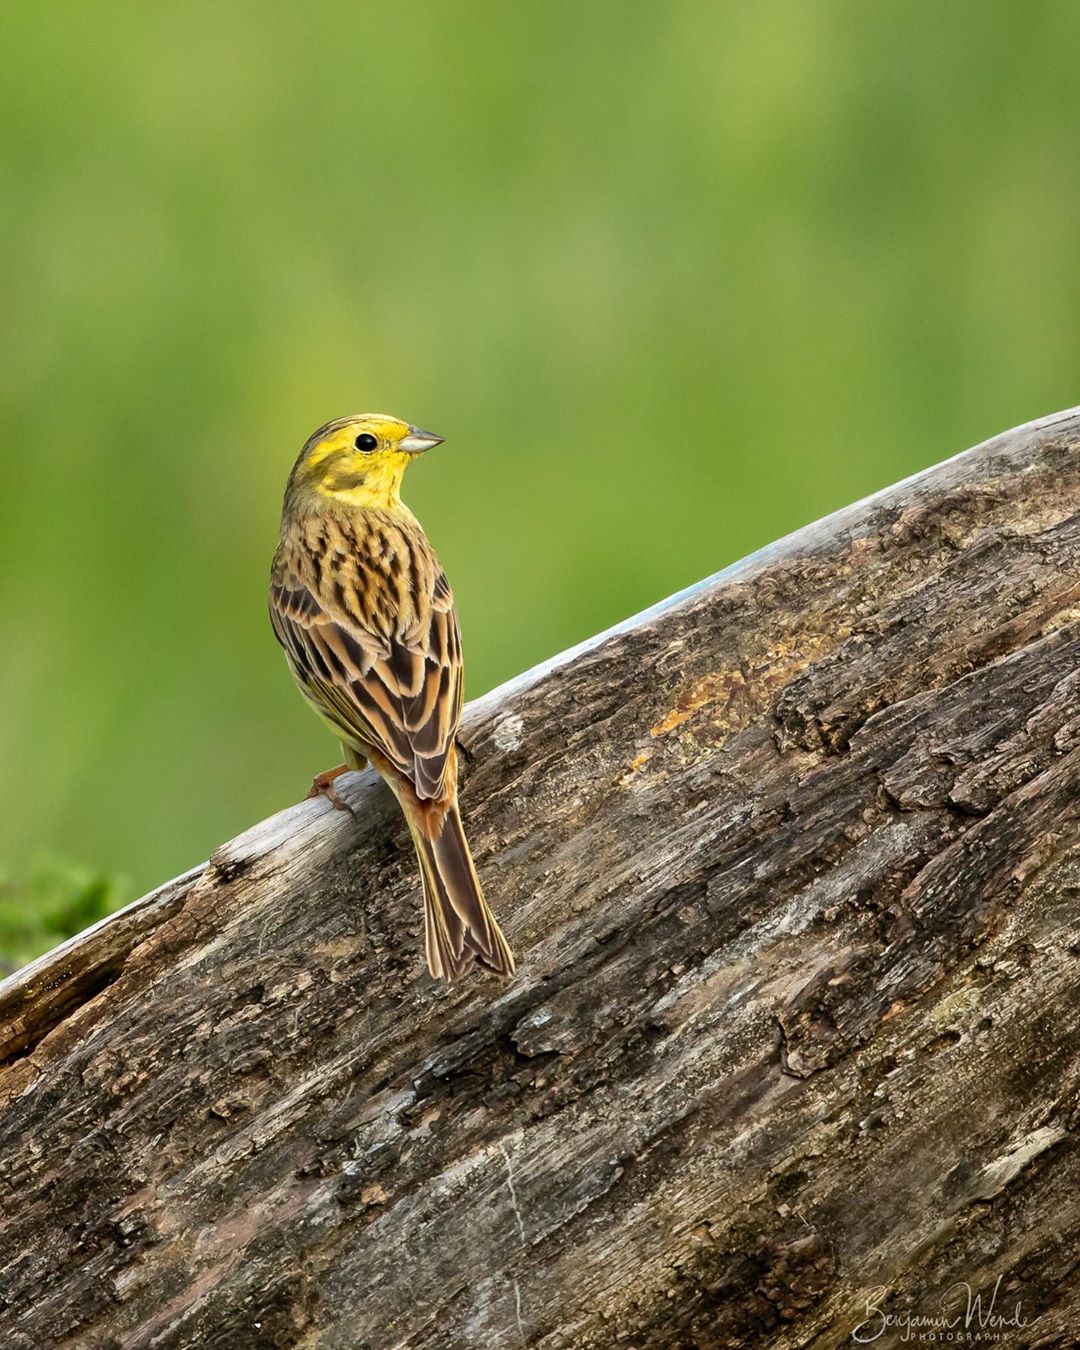 Фотографии птиц от Бенджамина Венде. ФОТО